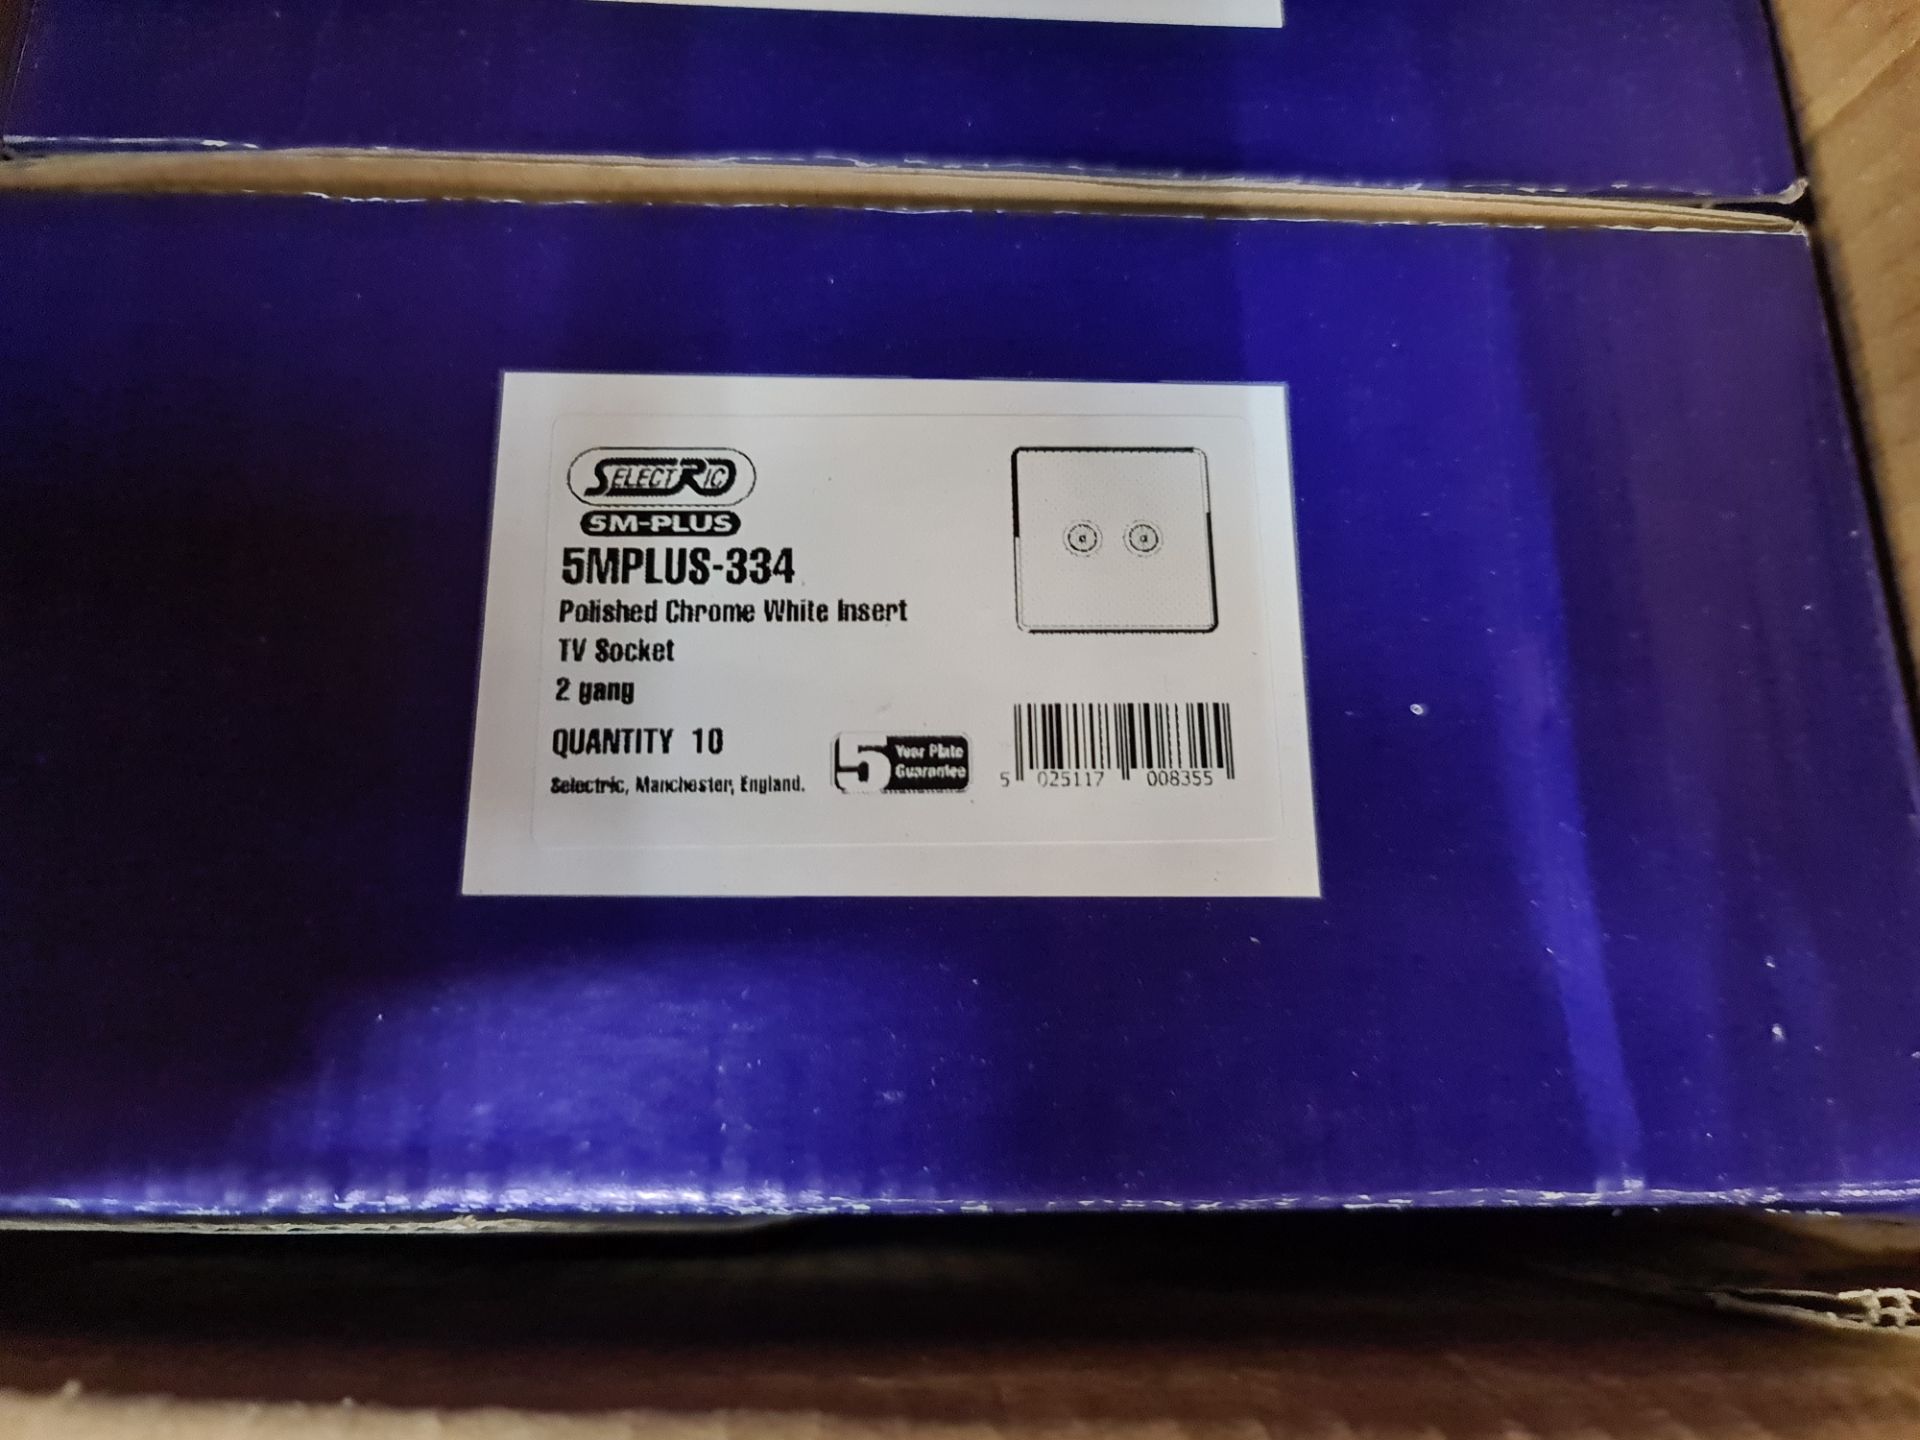 50 off (1 carton) Selectric 5M-PLUS 334 polished chrome 2 gang TV socket - white insert